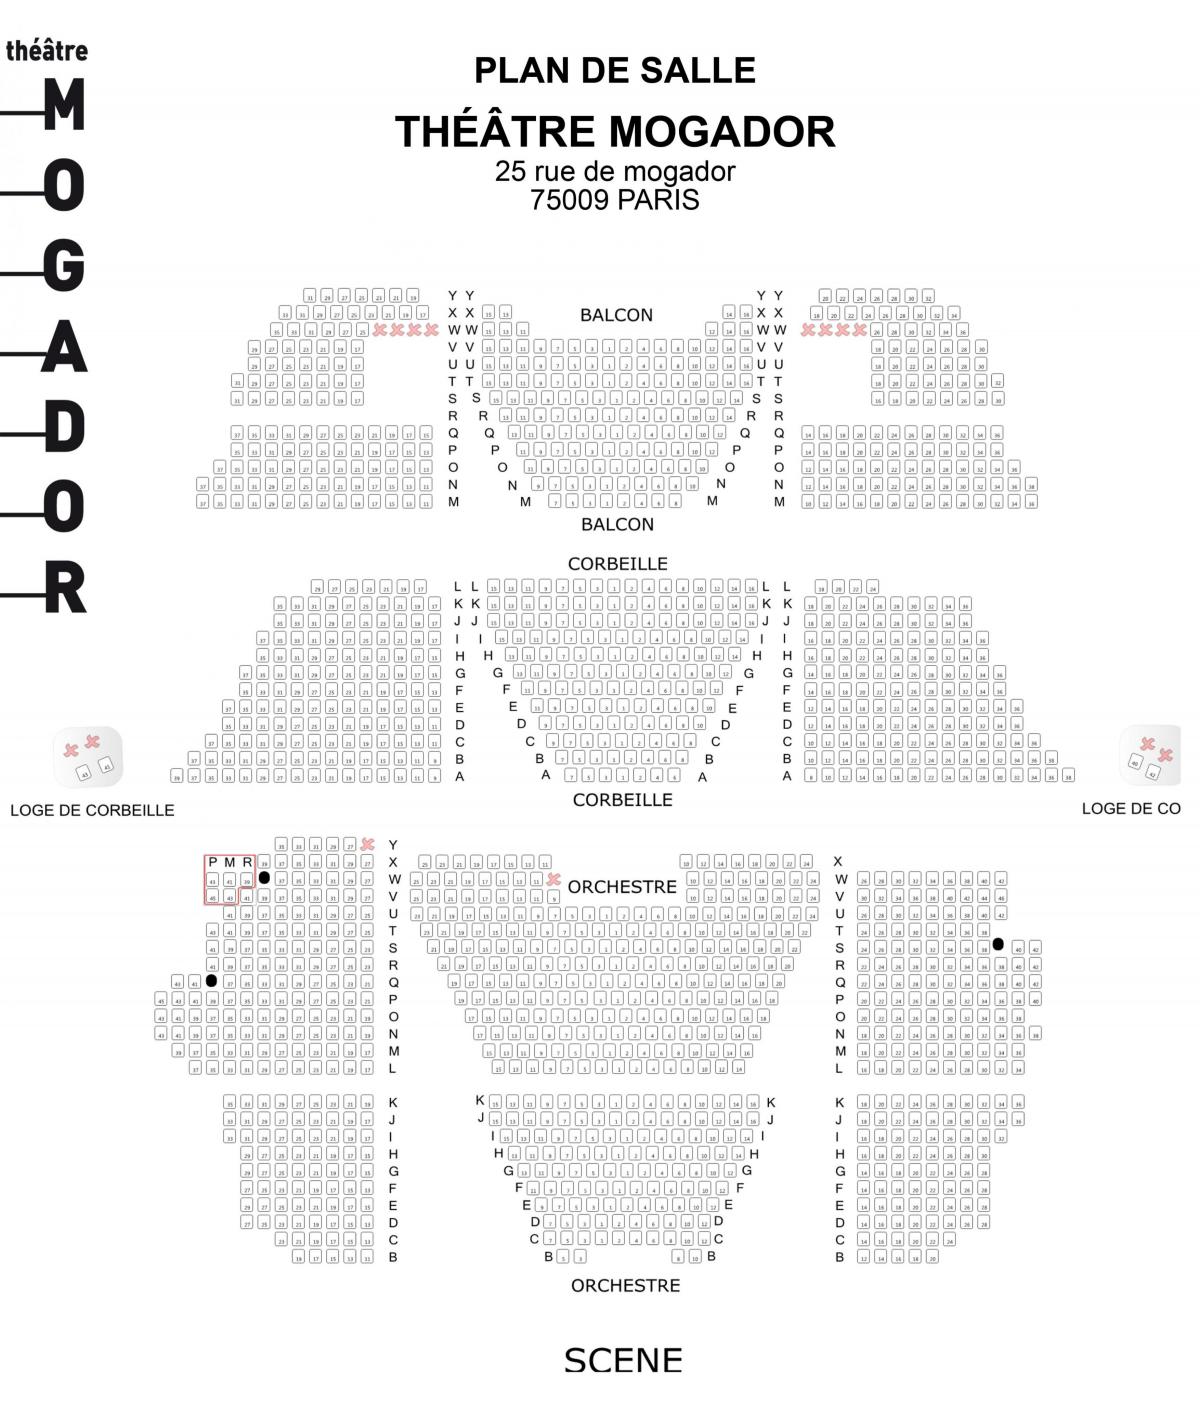 Kart av Théâtre Mogador